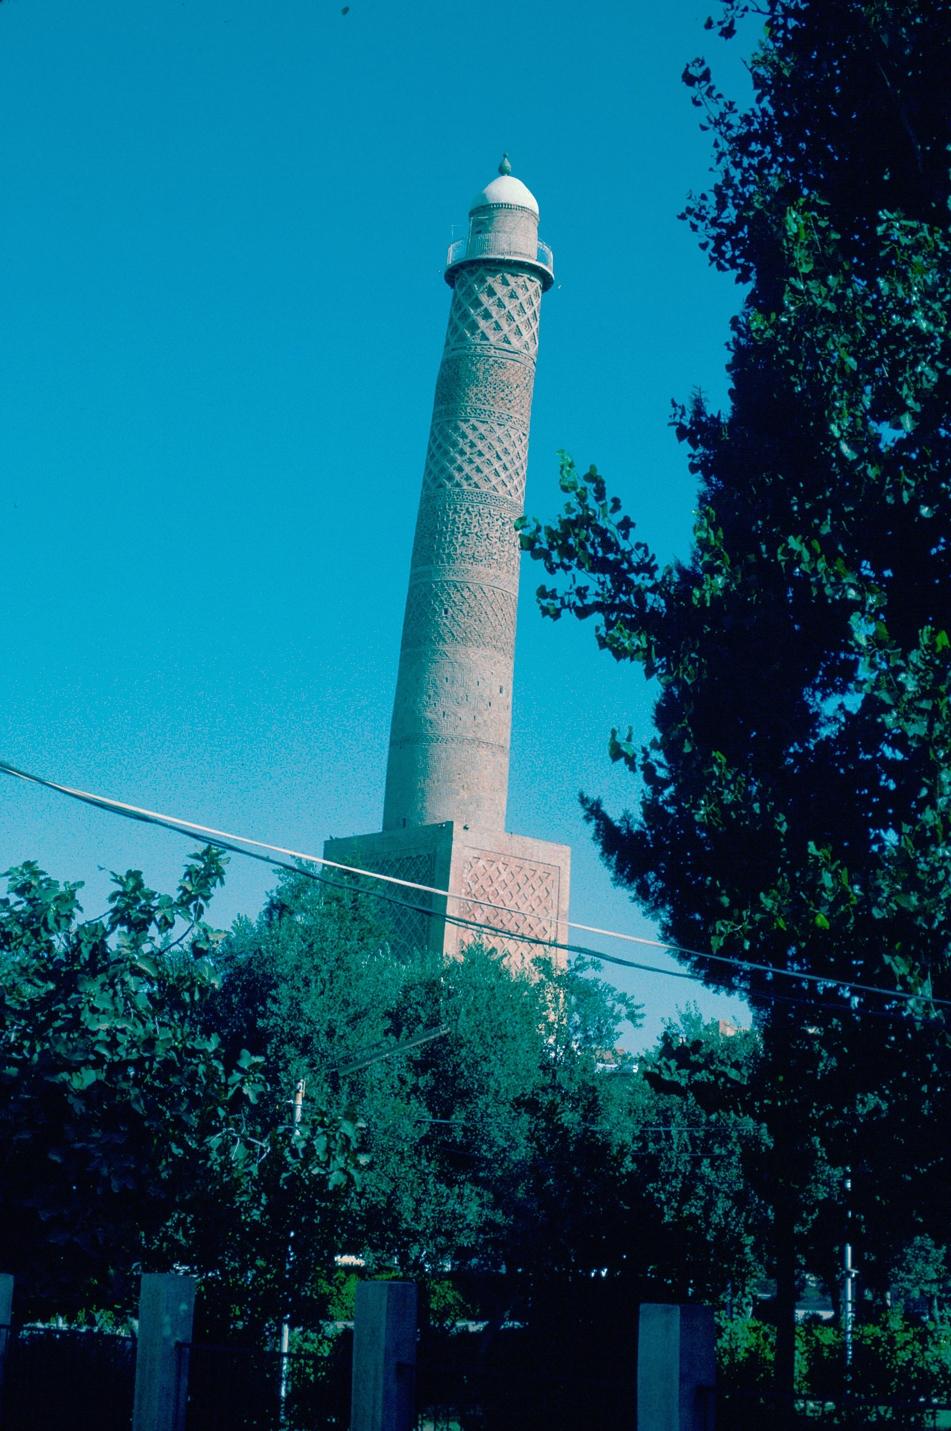 General view of minaret